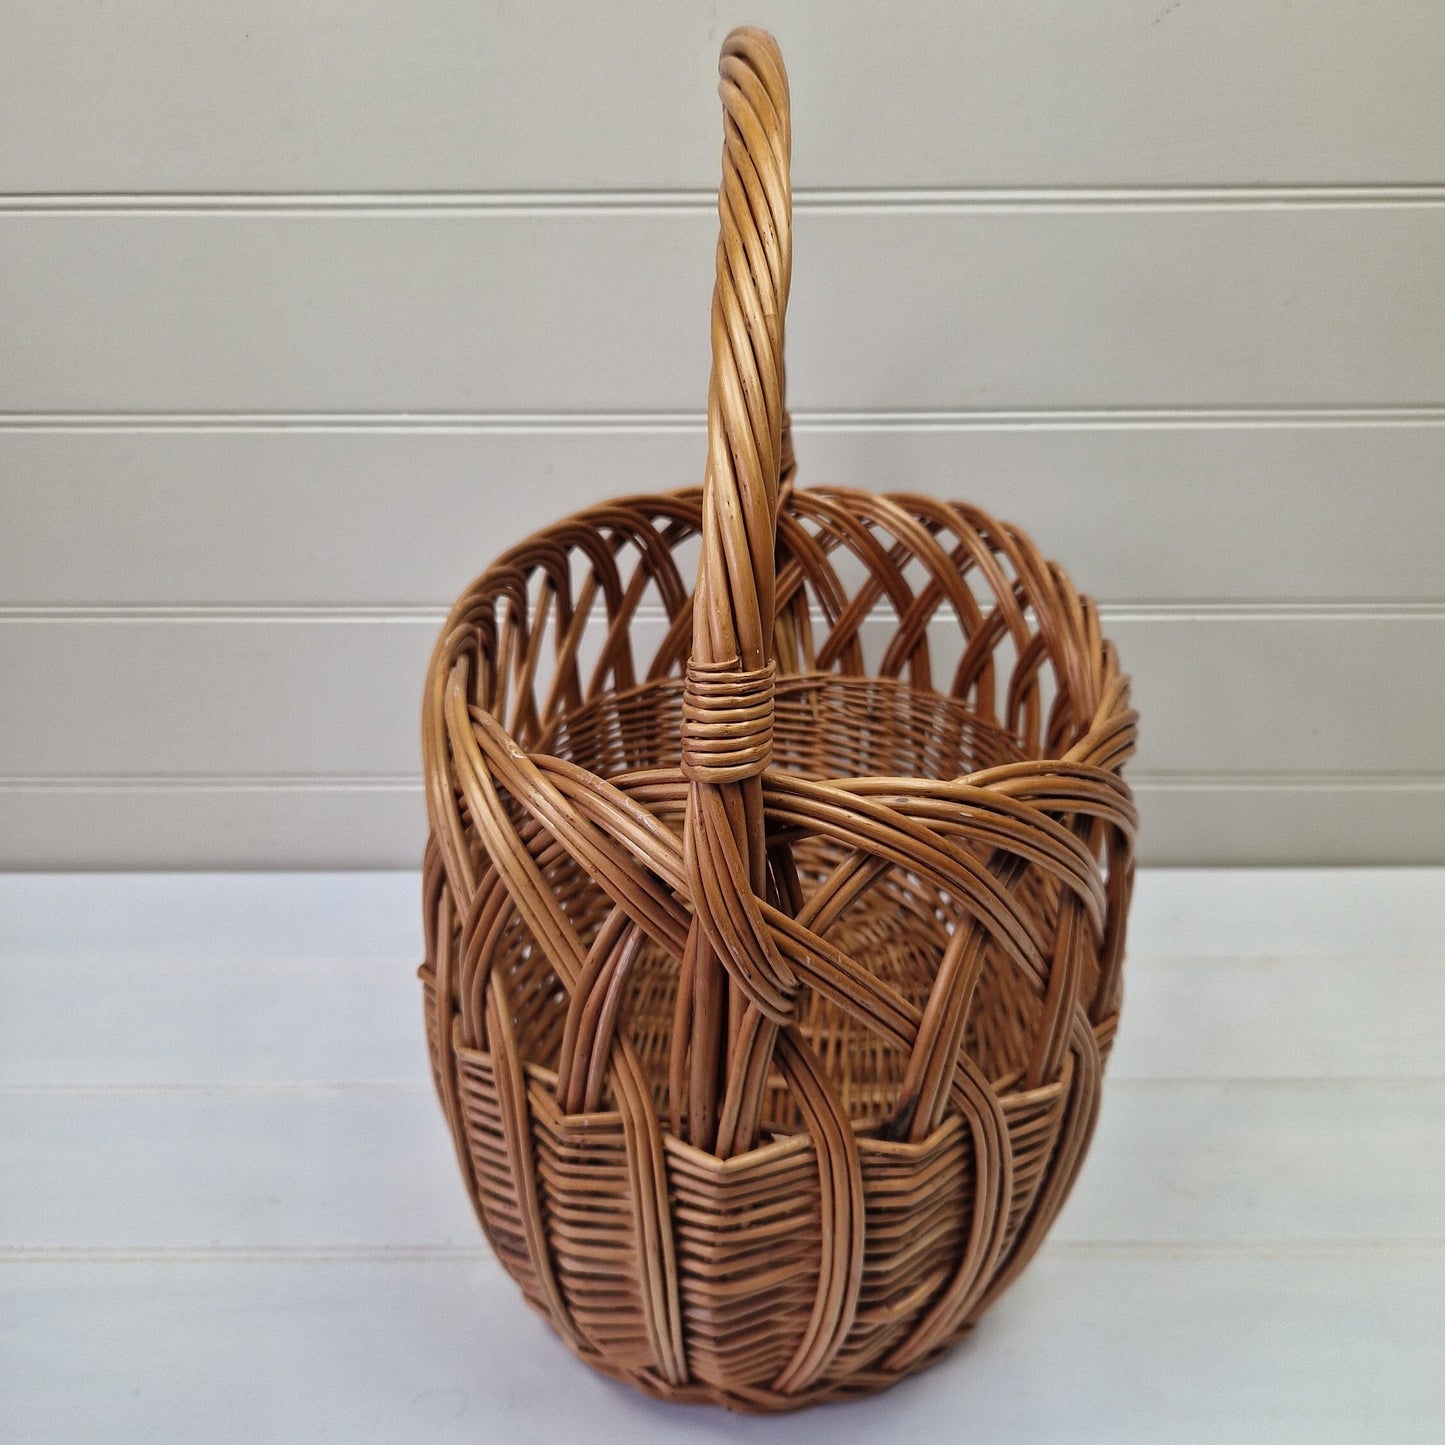 Vintage shopping basket French handmade market basket Wicker shopper